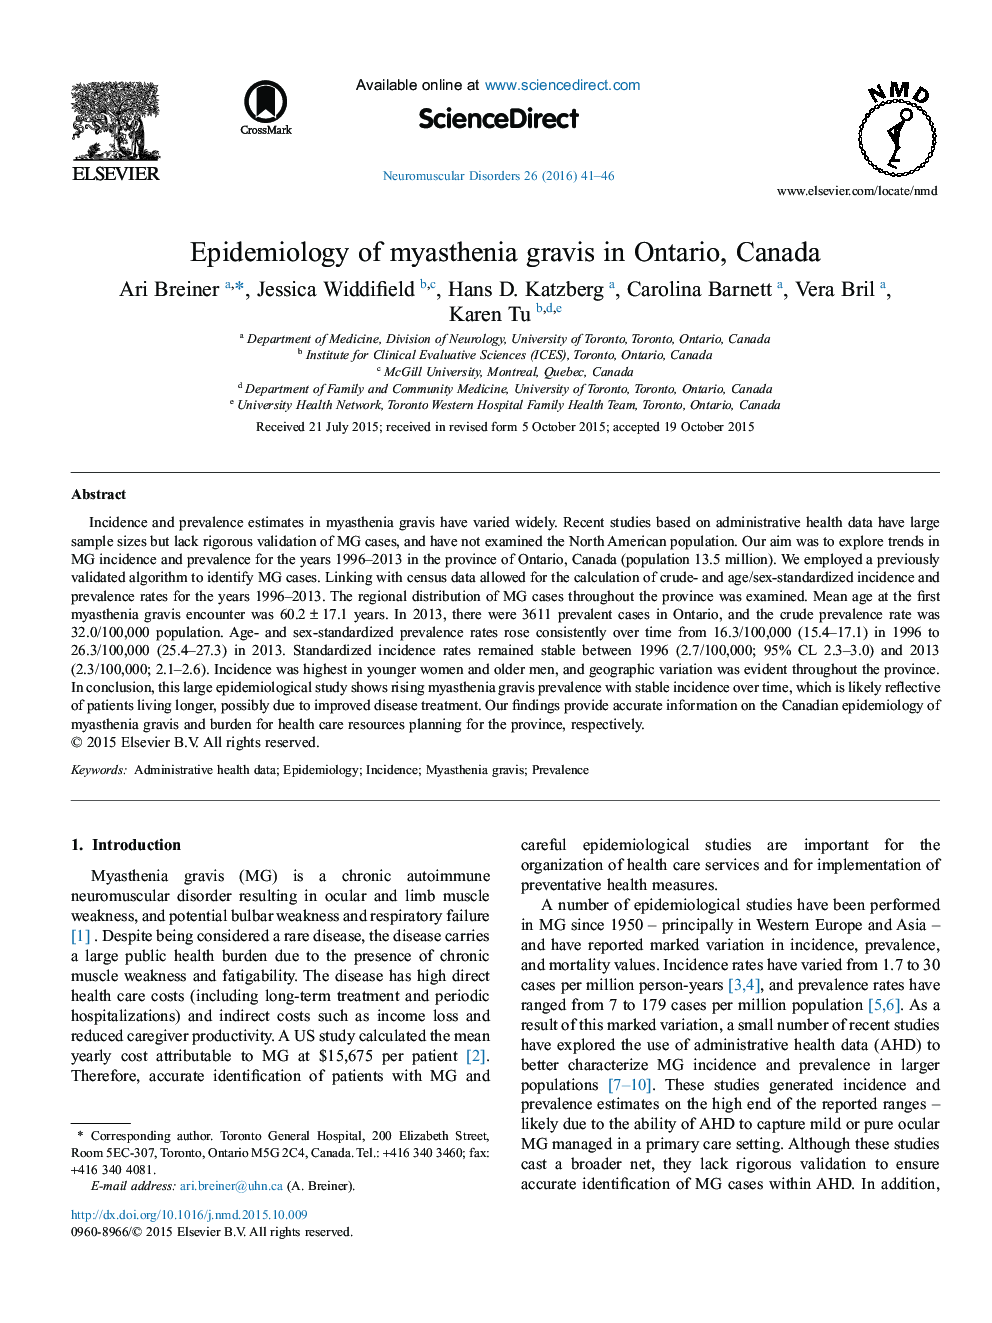 Epidemiology of myasthenia gravis in Ontario, Canada